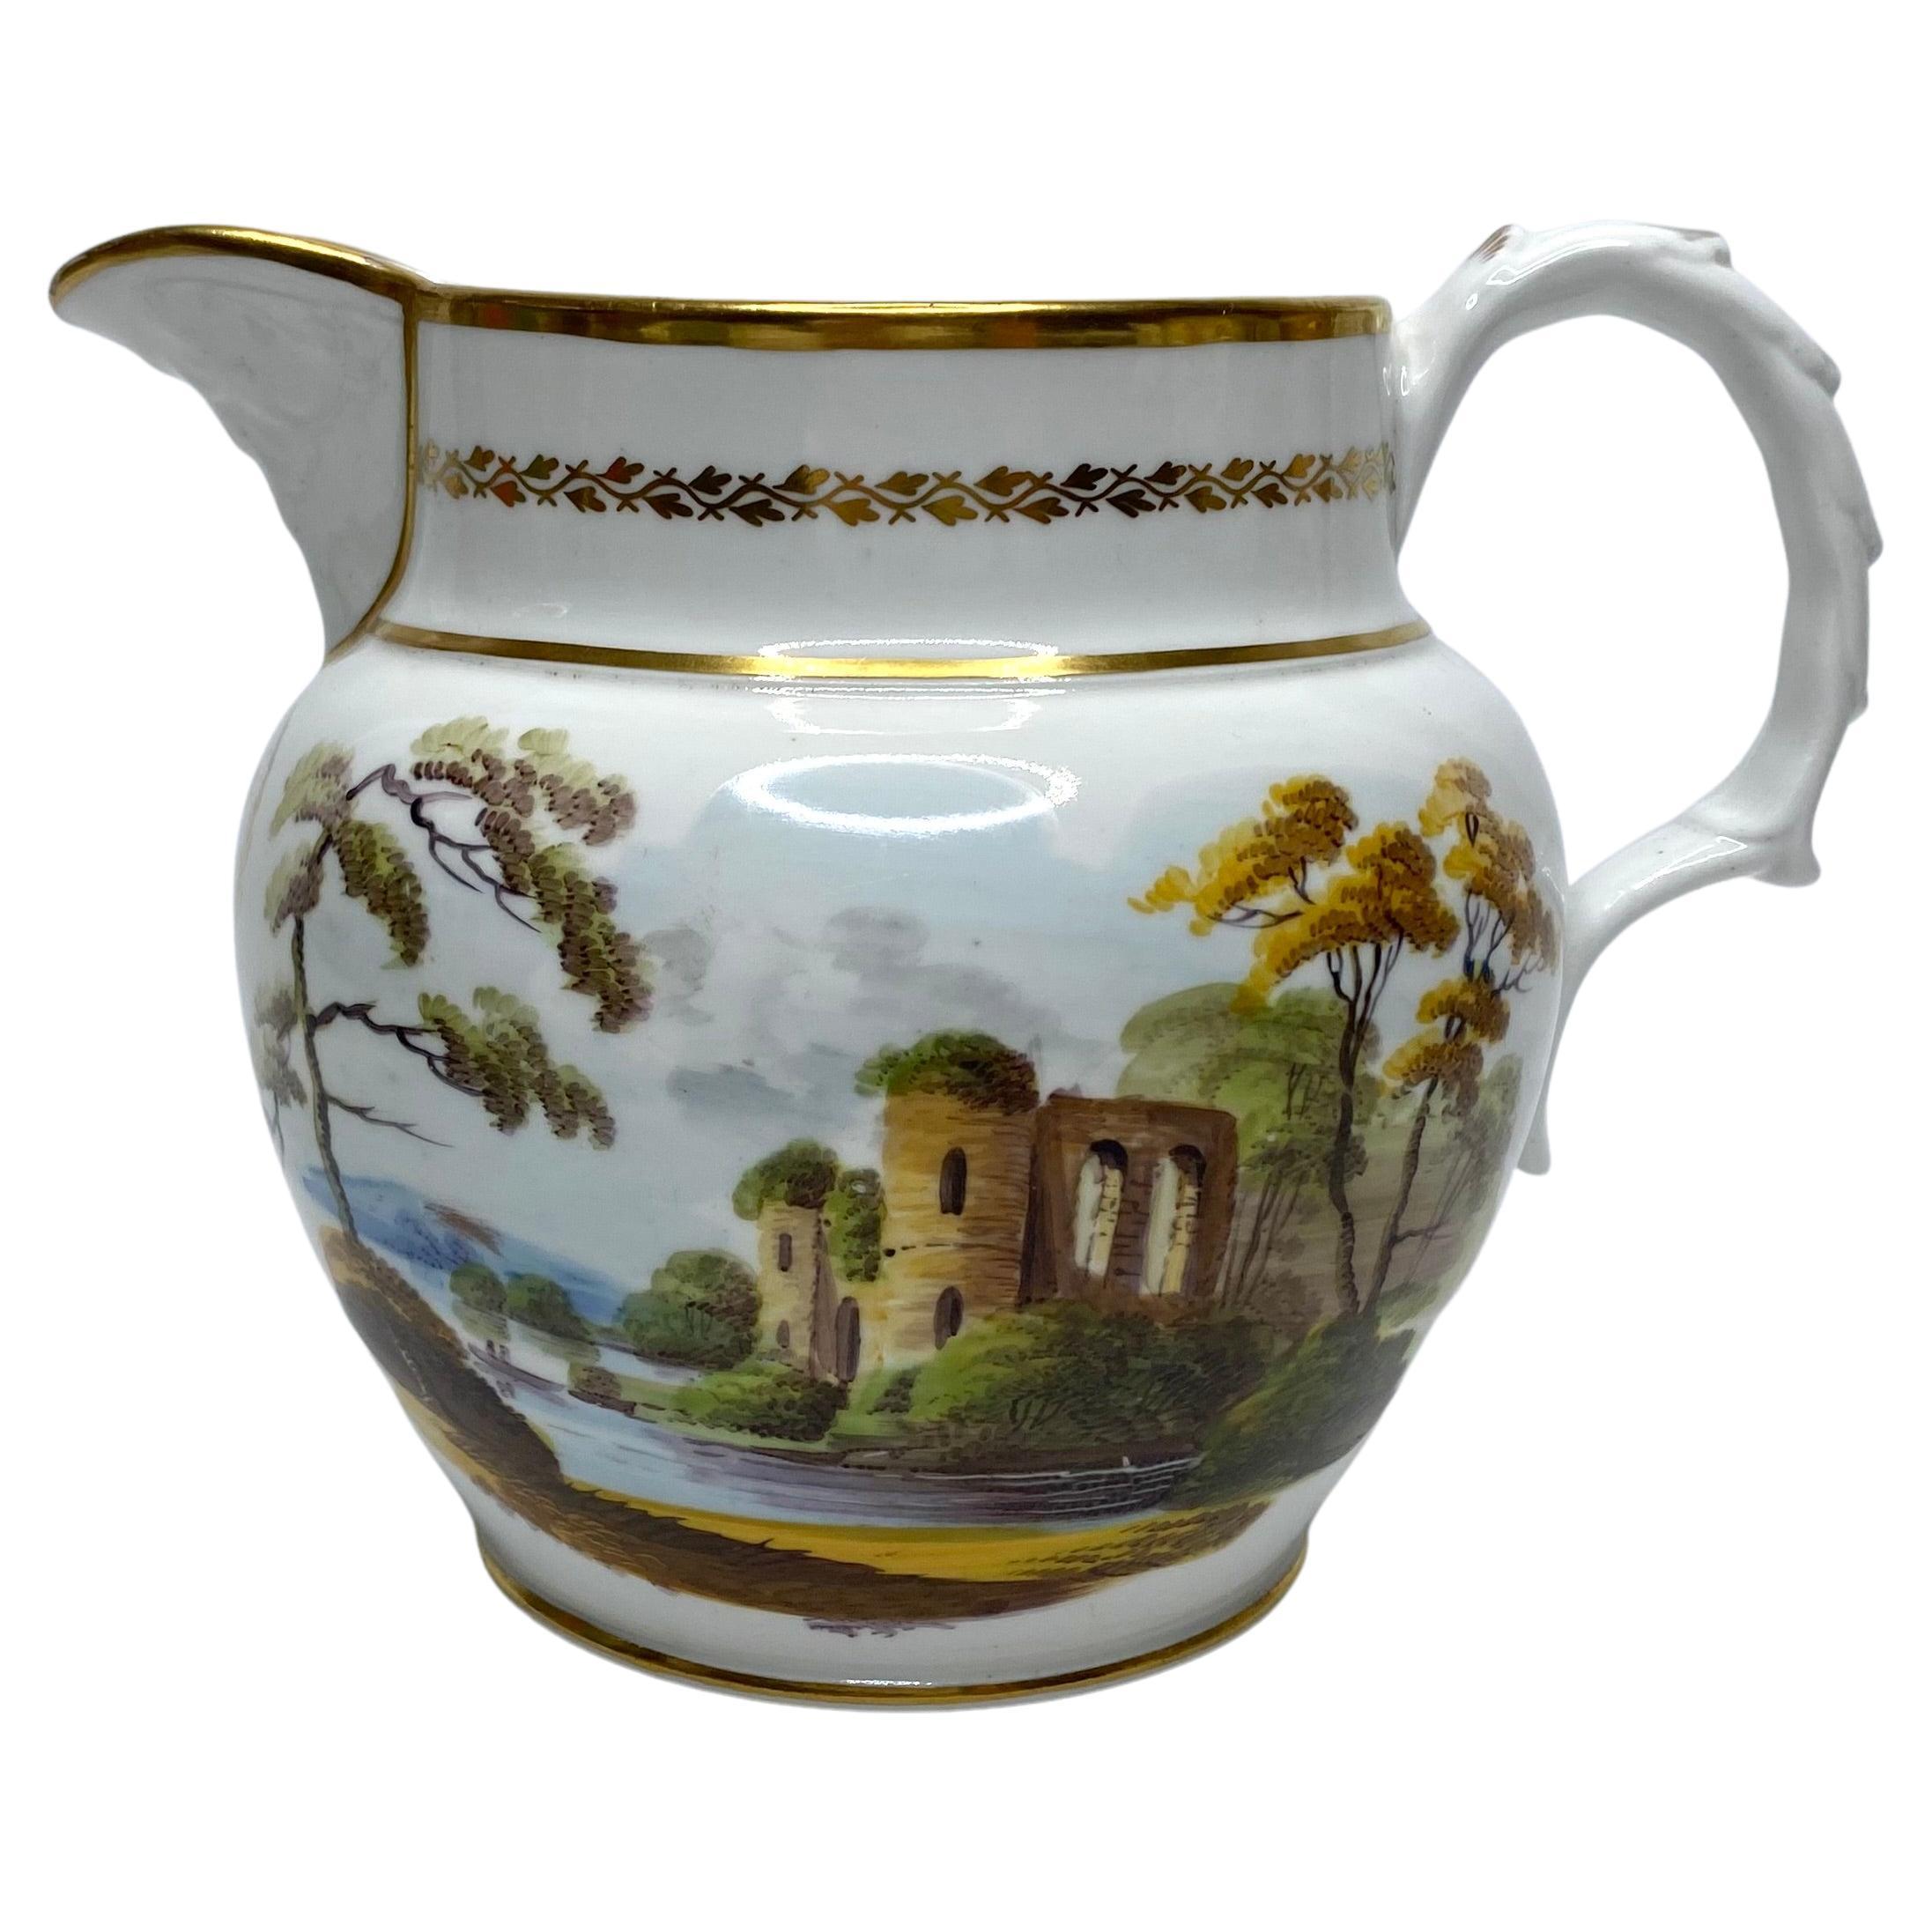 New Hall bone china water jug, ‘JH’, c. 1815. For Sale